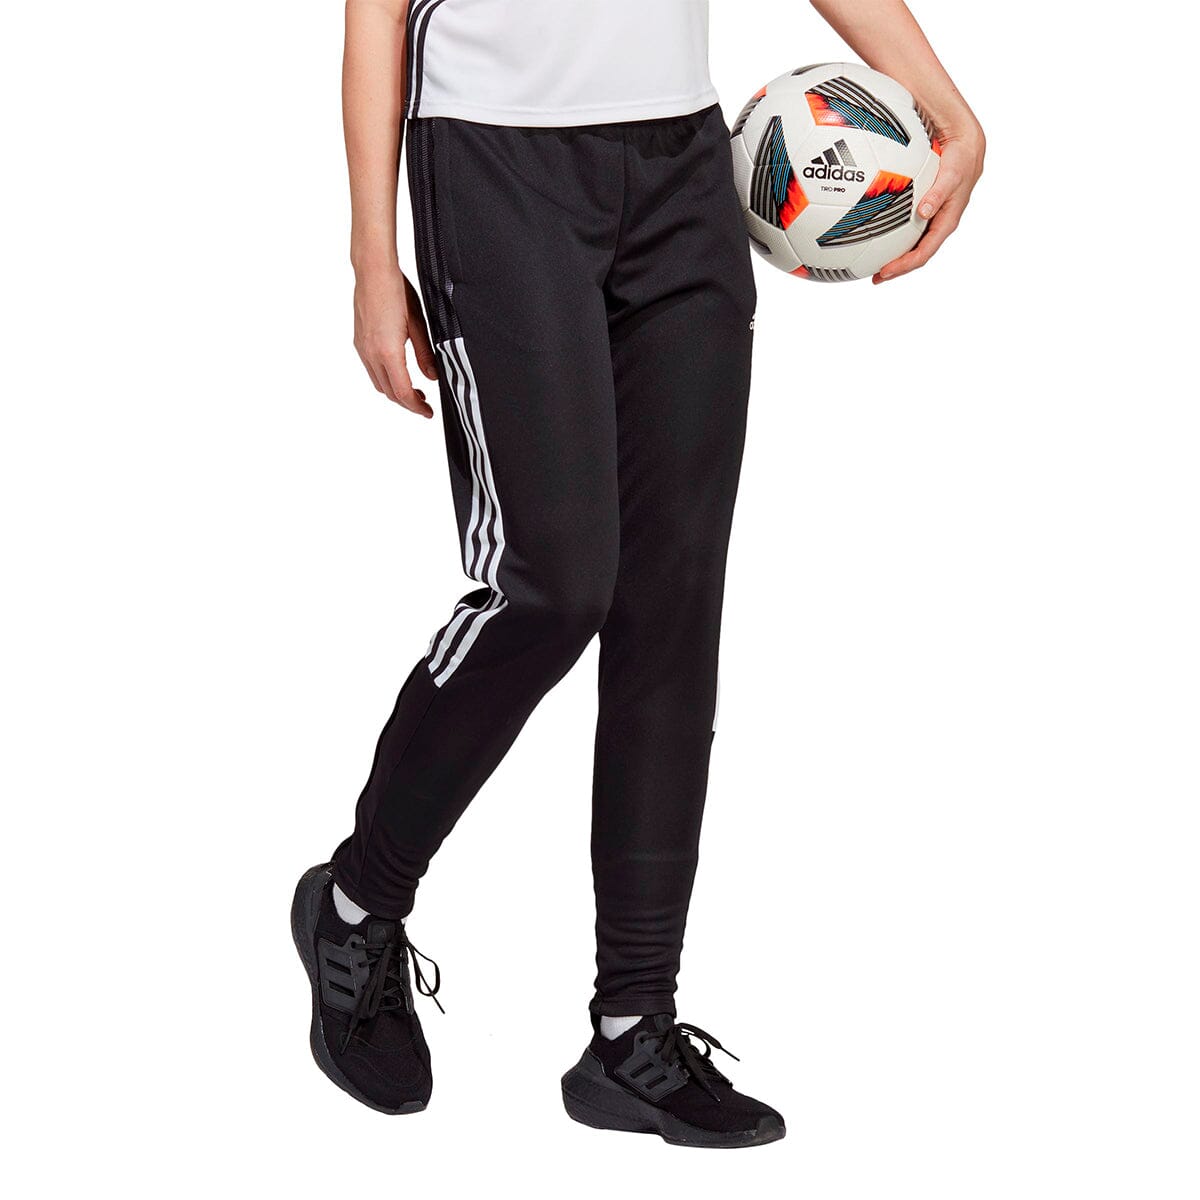 adidas Condivo 18 Navy/White Youth Training Warmup Soccer Pant